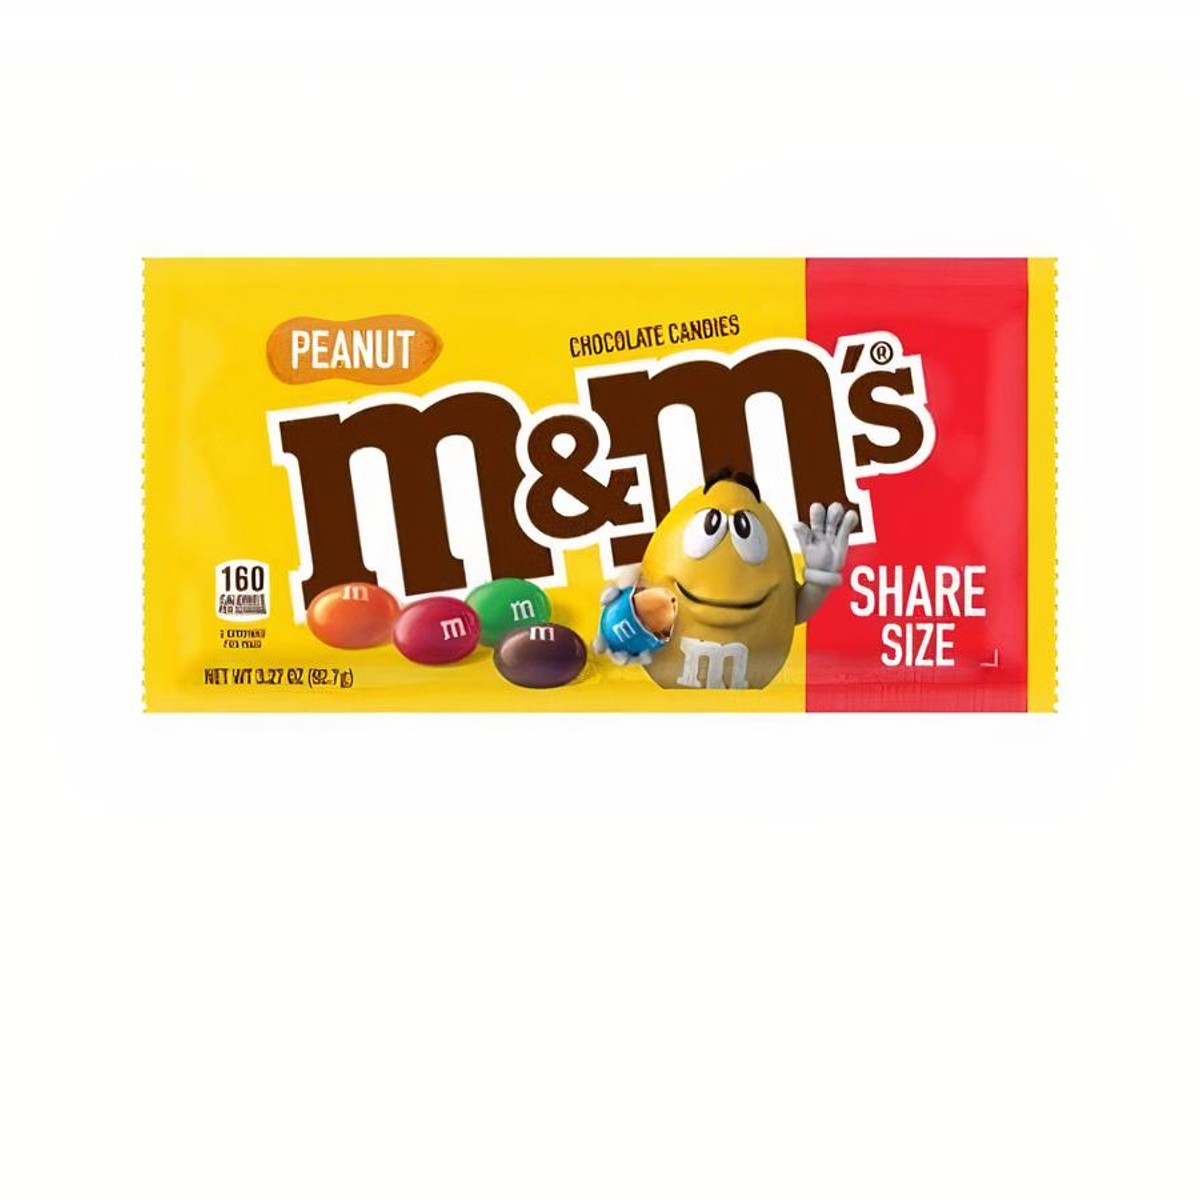 M&M's Mint Dark Chocolate Candy, 10.19 Oz.